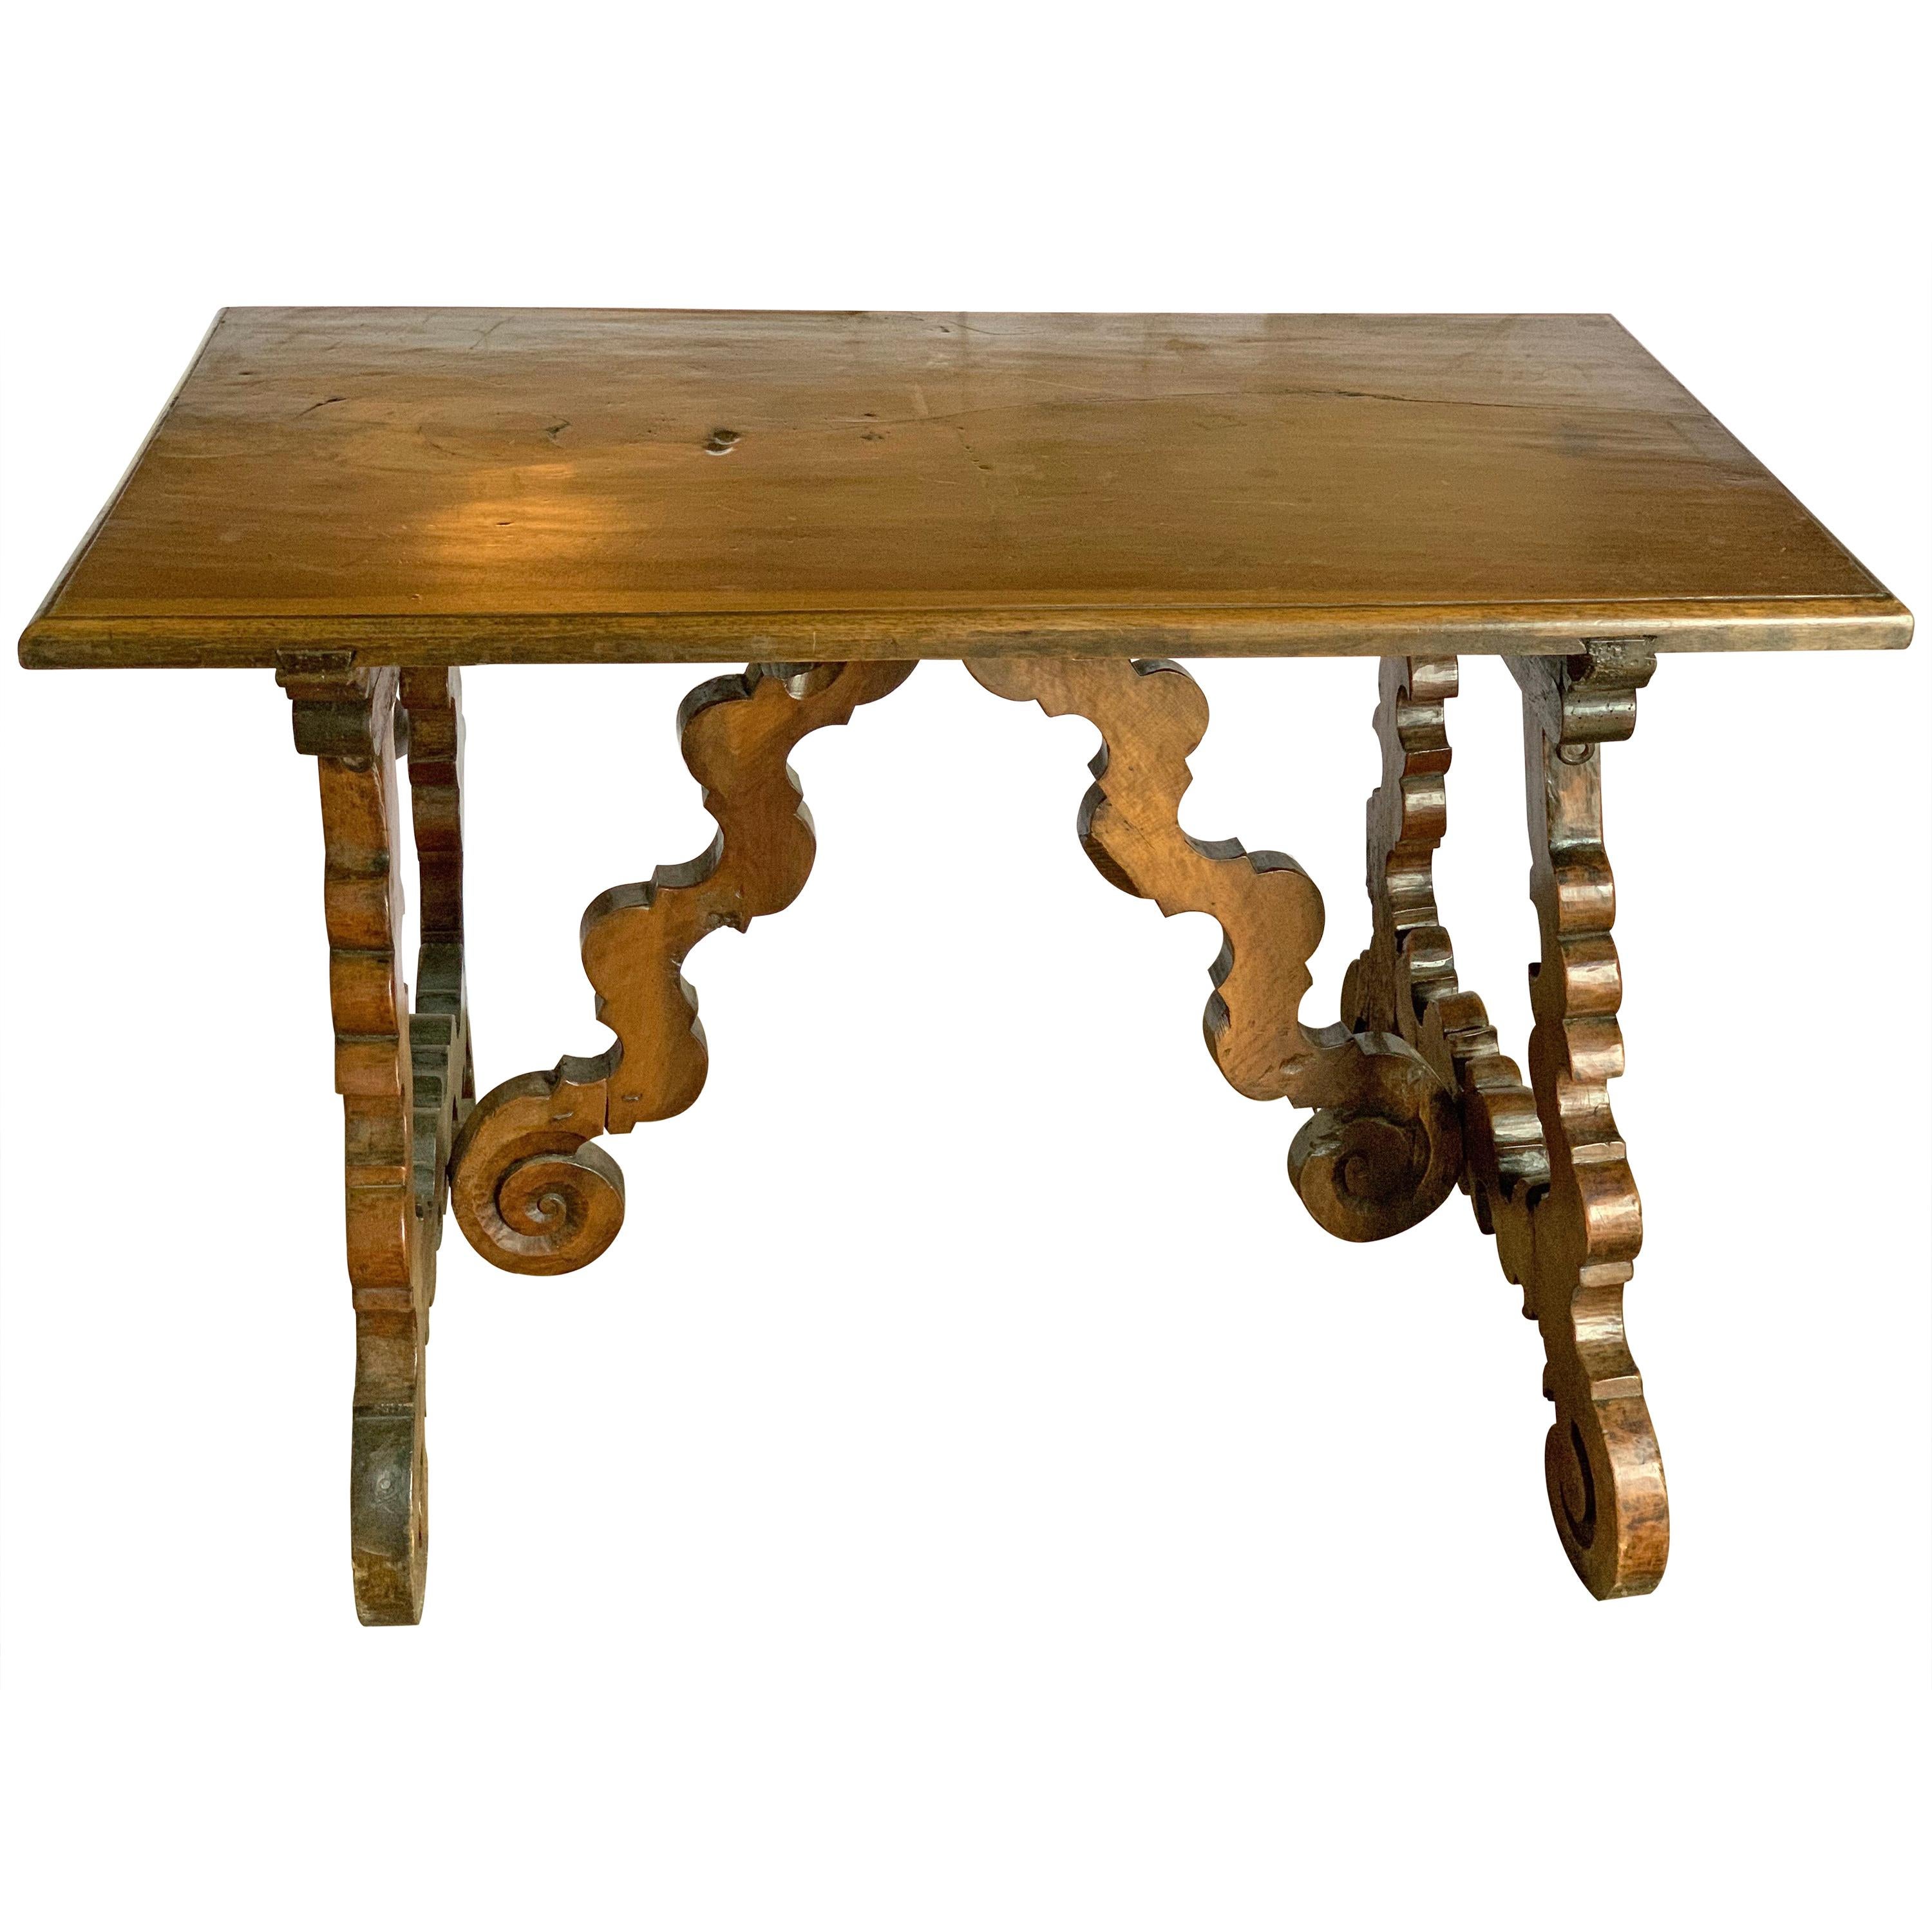 17th Century Walnut Table from Umbria, Italy